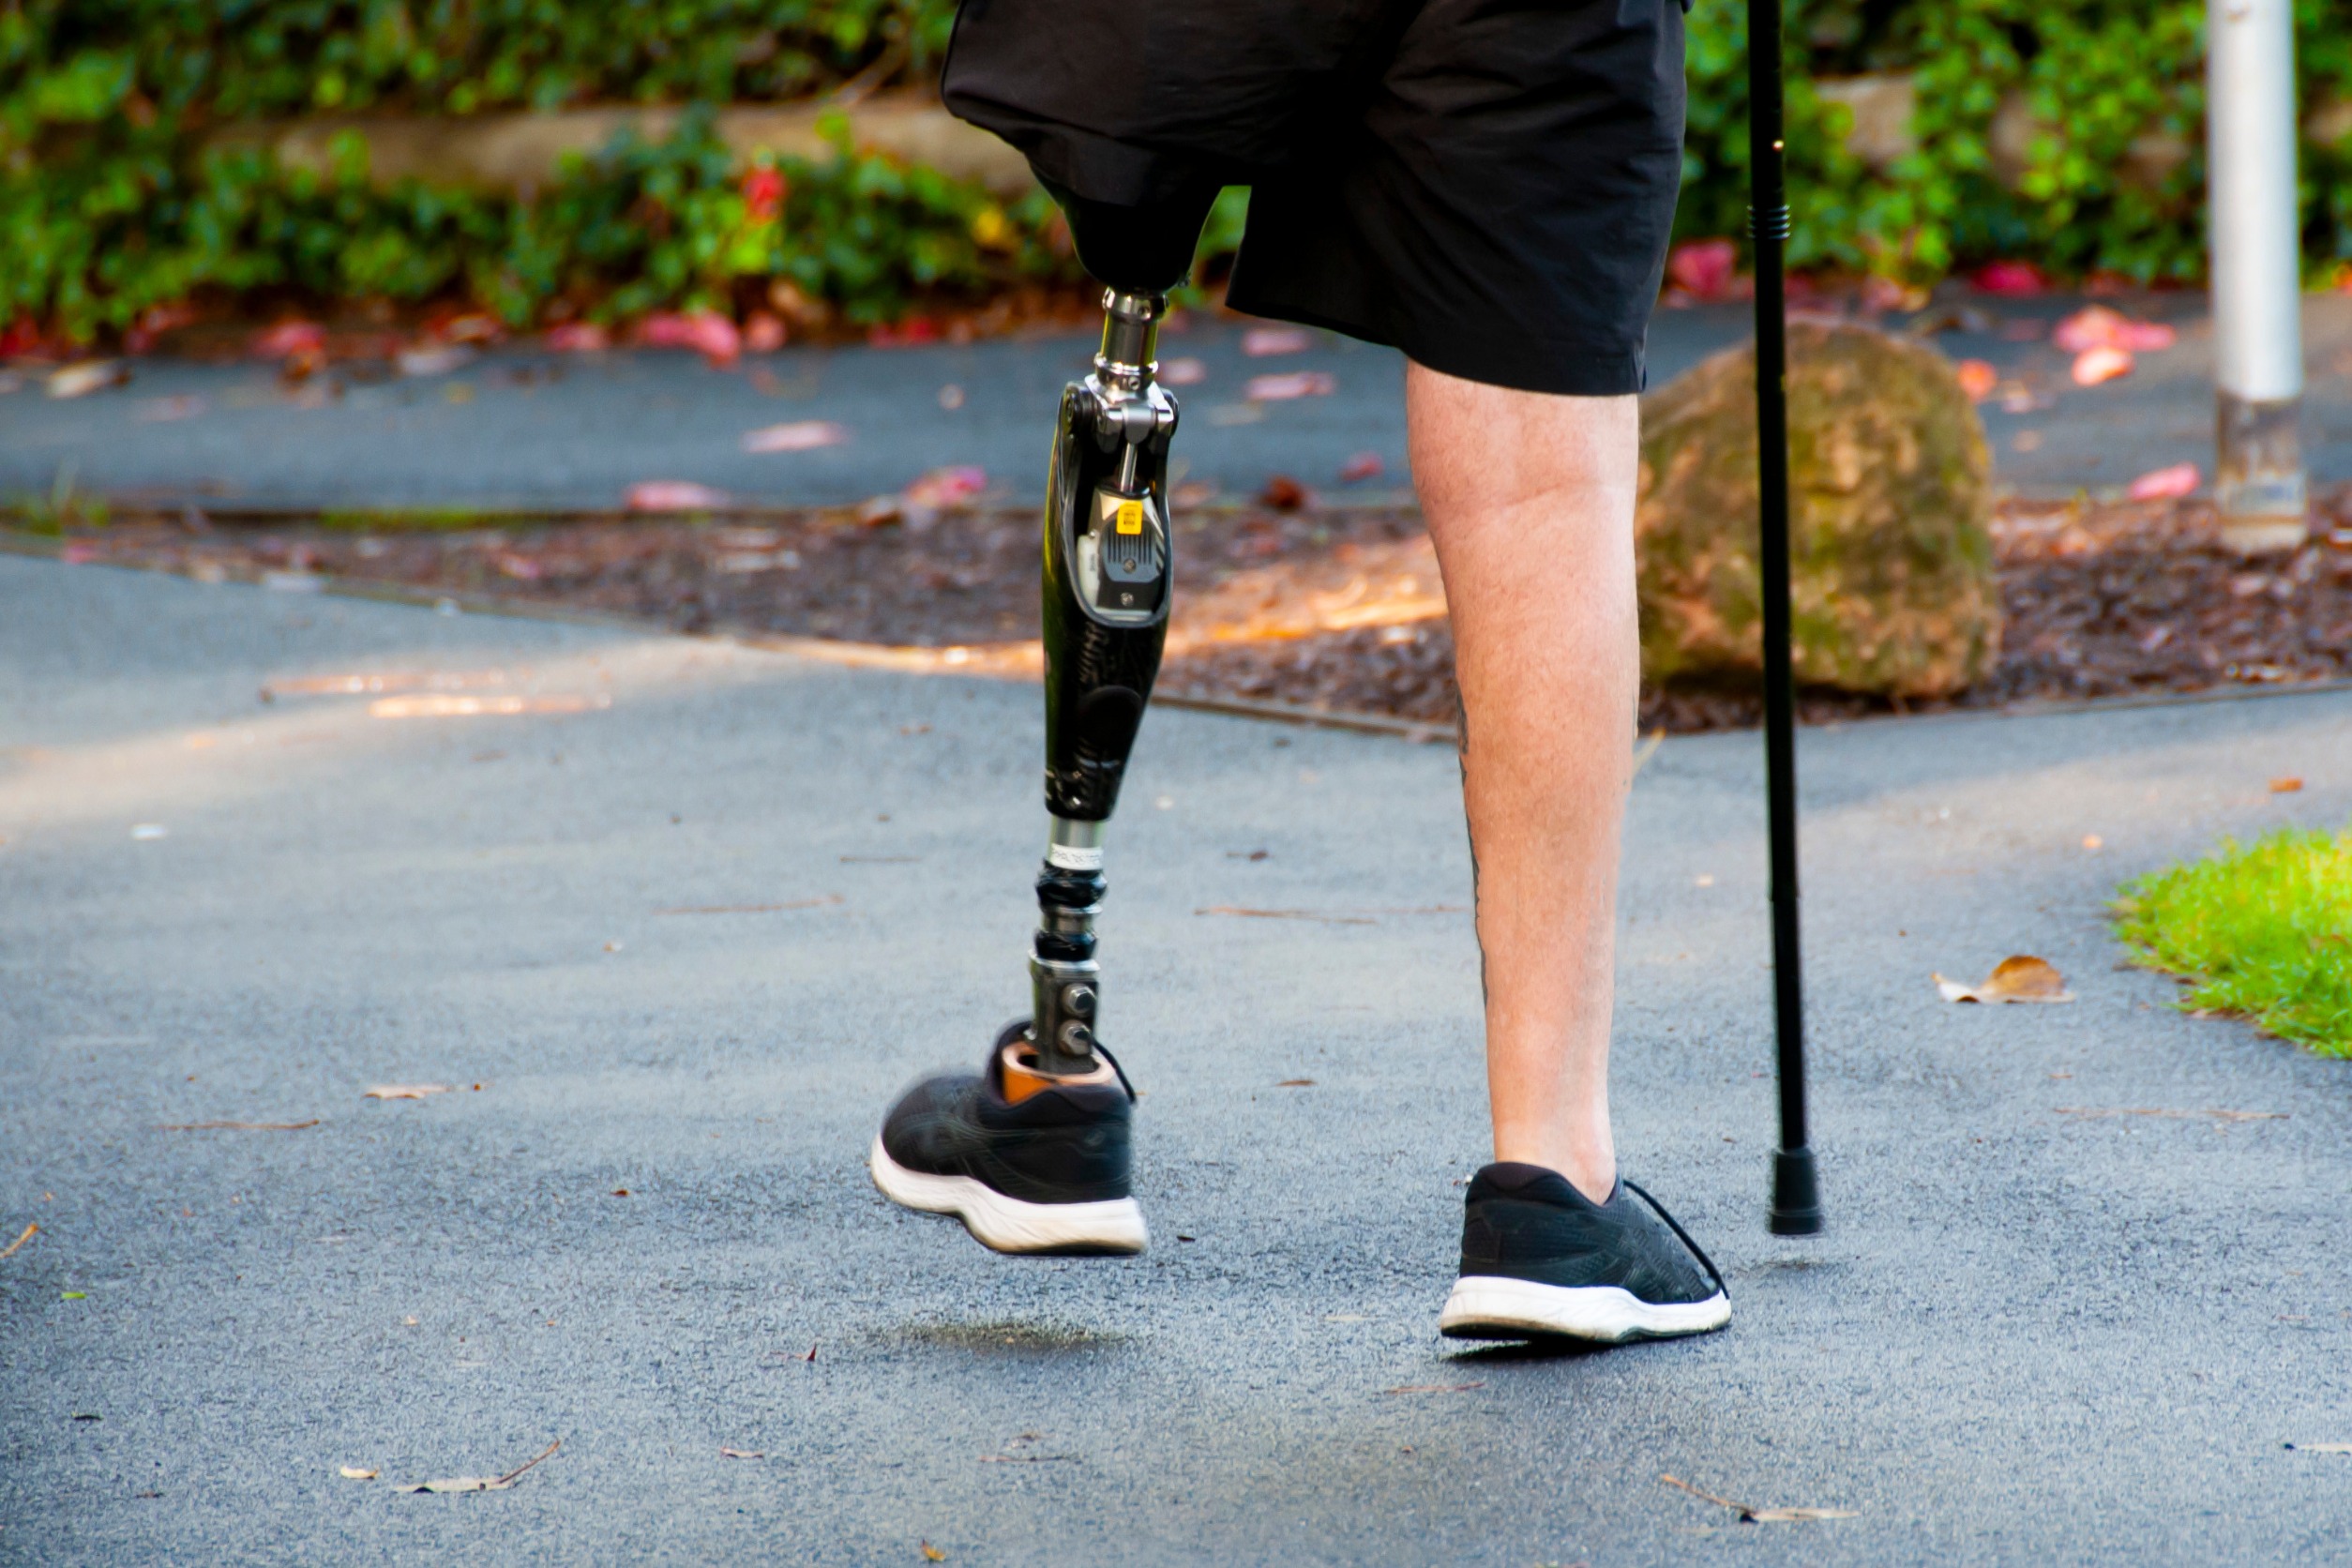 Bionic leg breakthrough: mind-